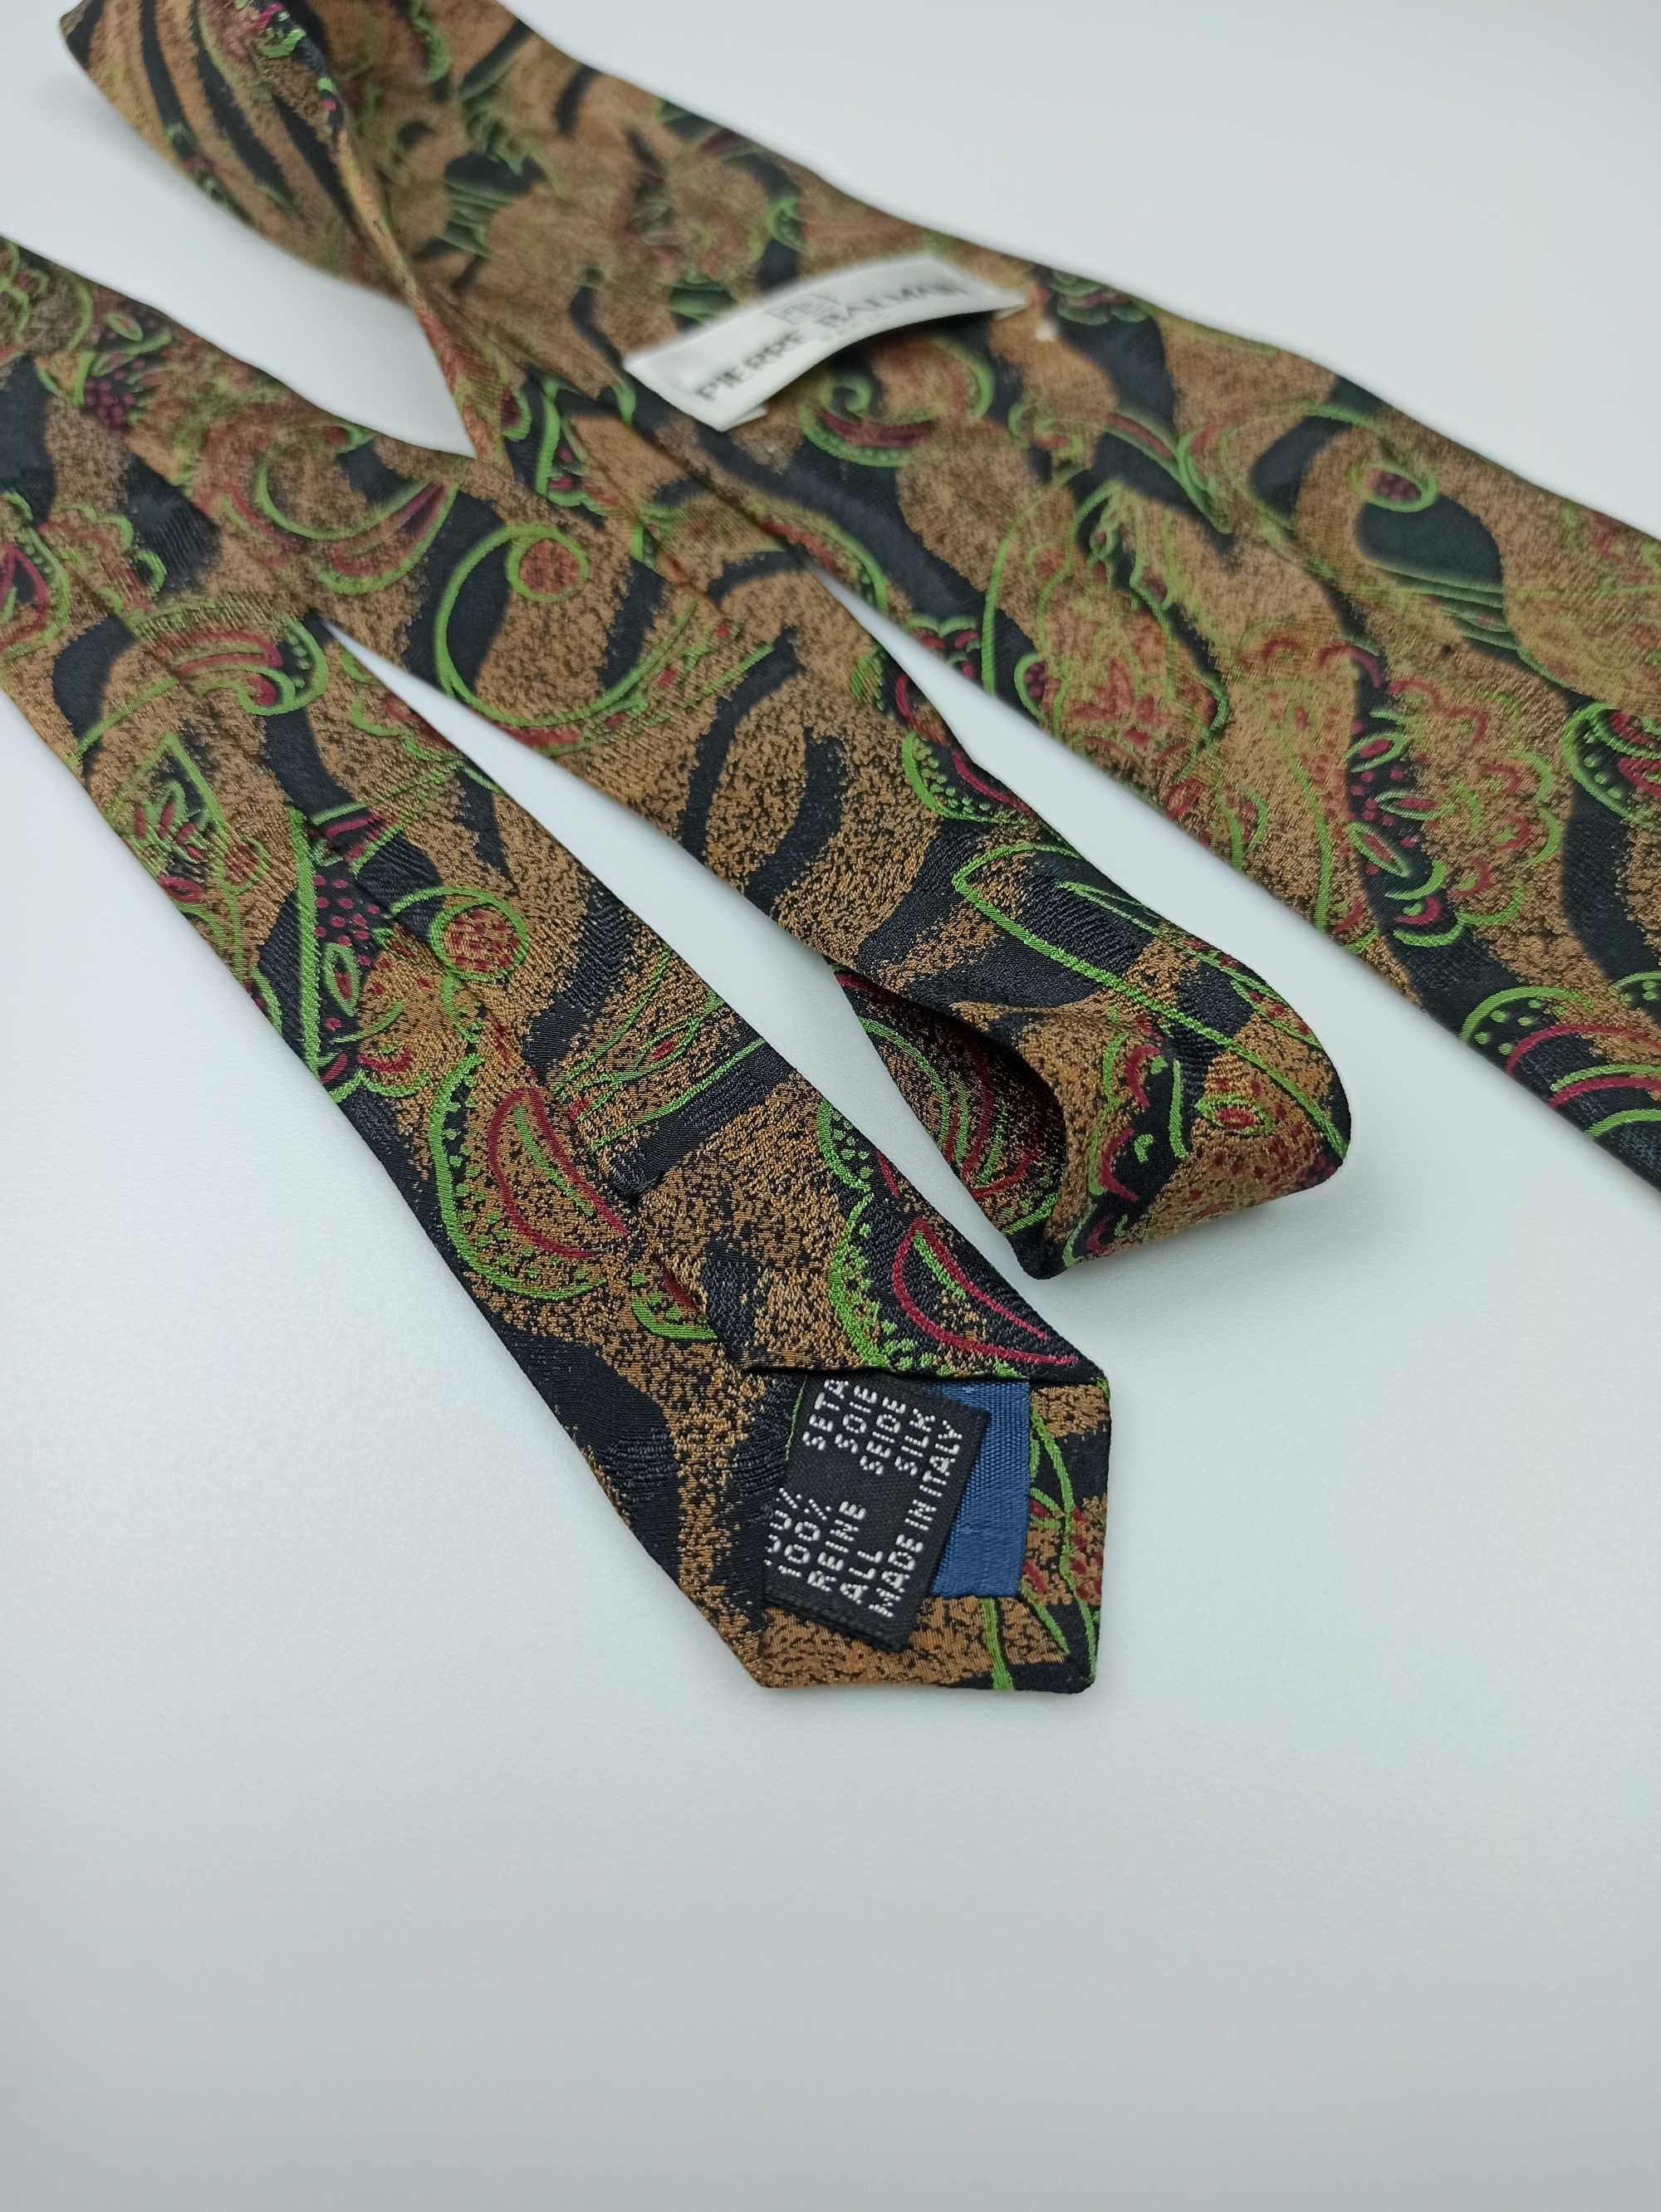 Pierre Balmain jedwabny krawat wzory paisley ulu26